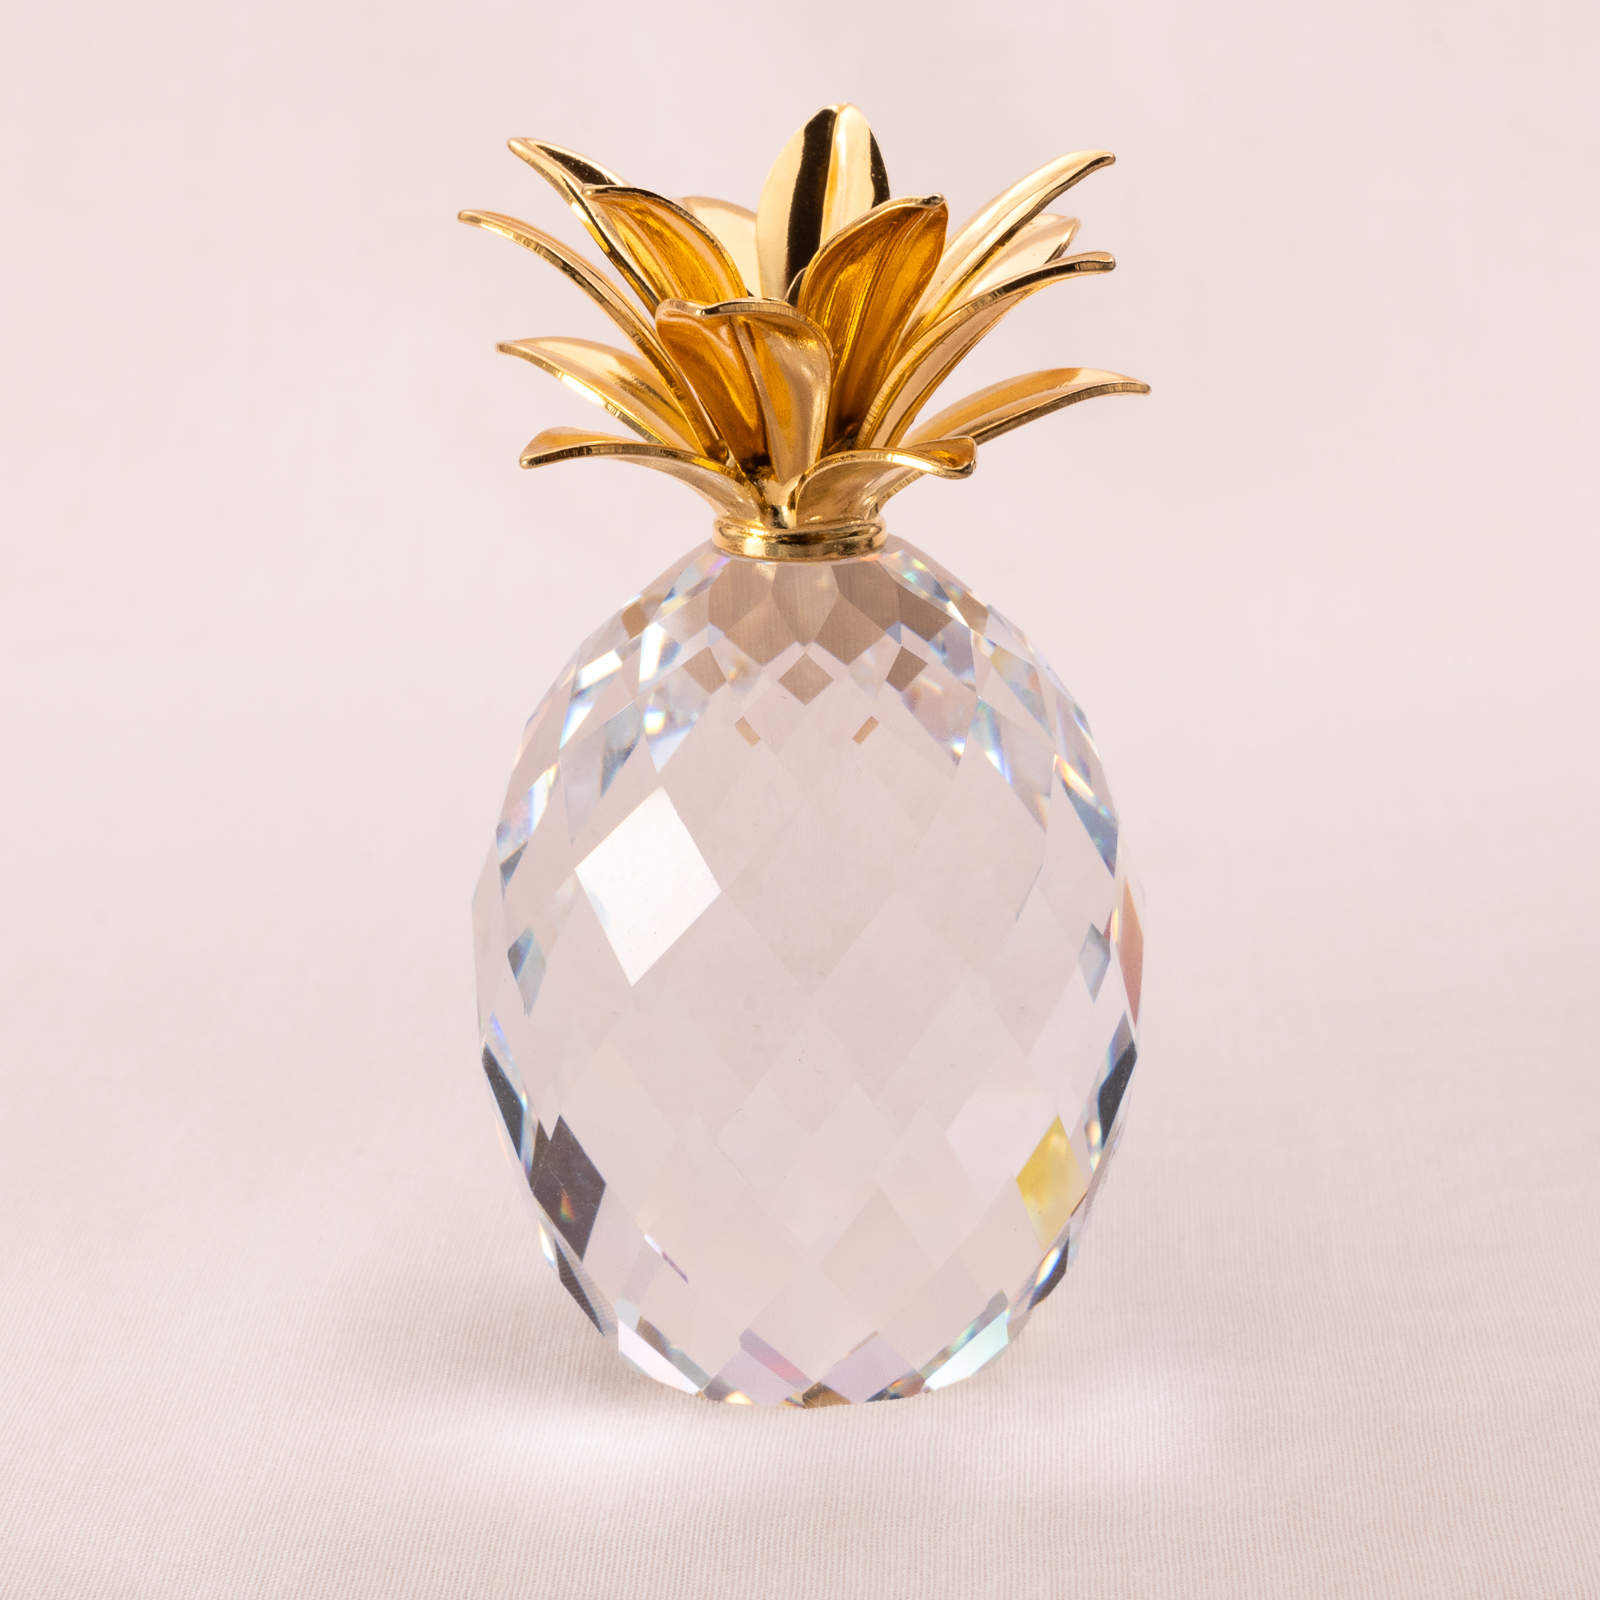 SWAROVSKI glittering crystal pineapple